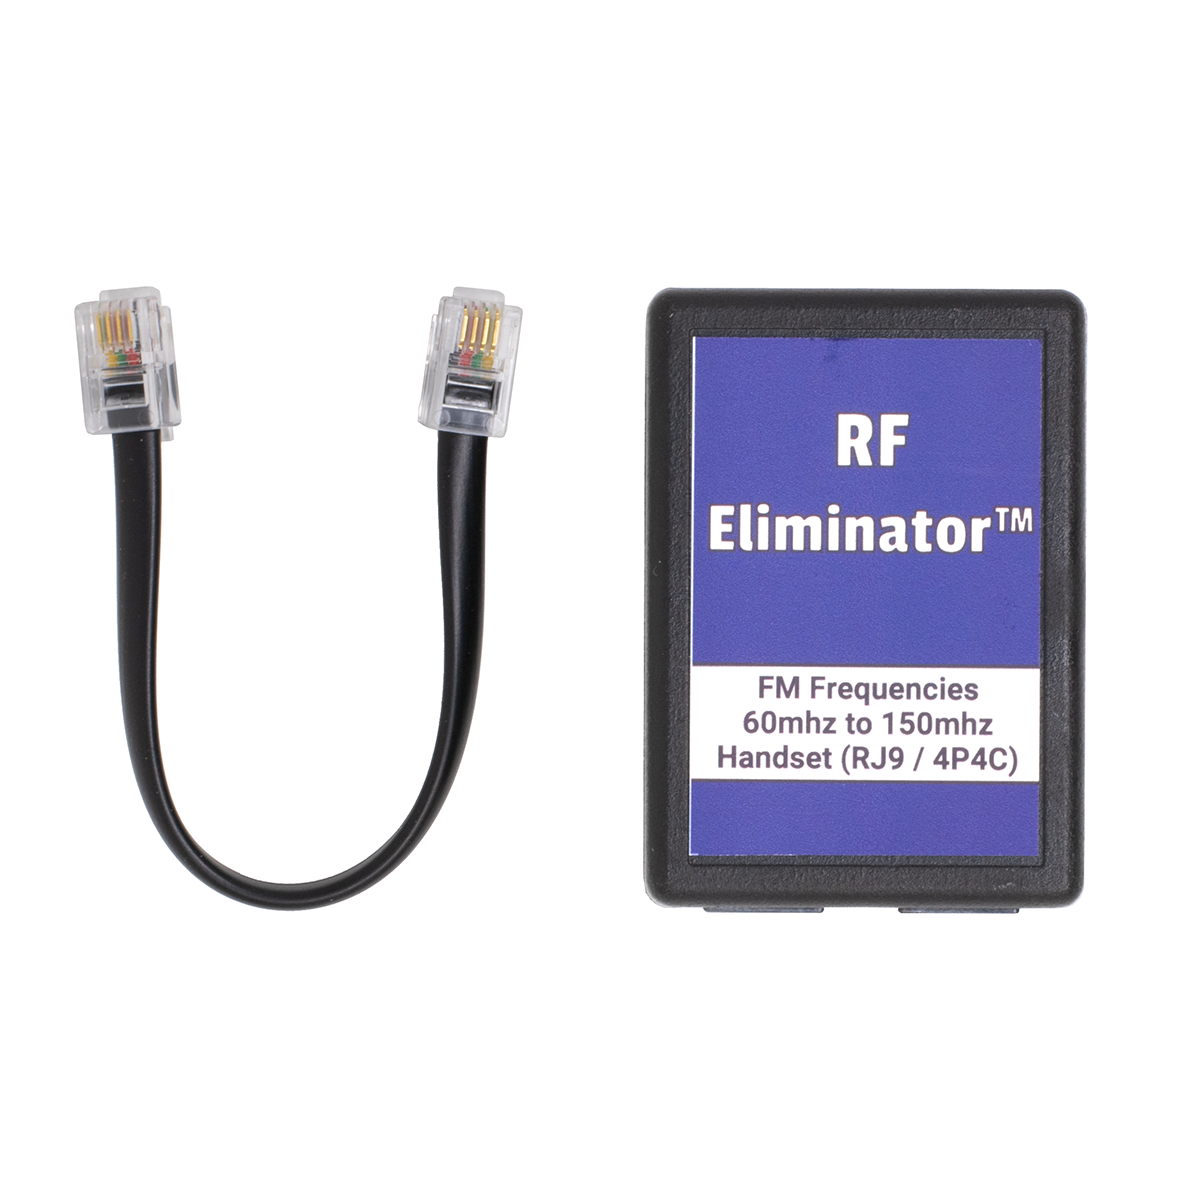 RF Eliminator - Handset - FM (Top View)